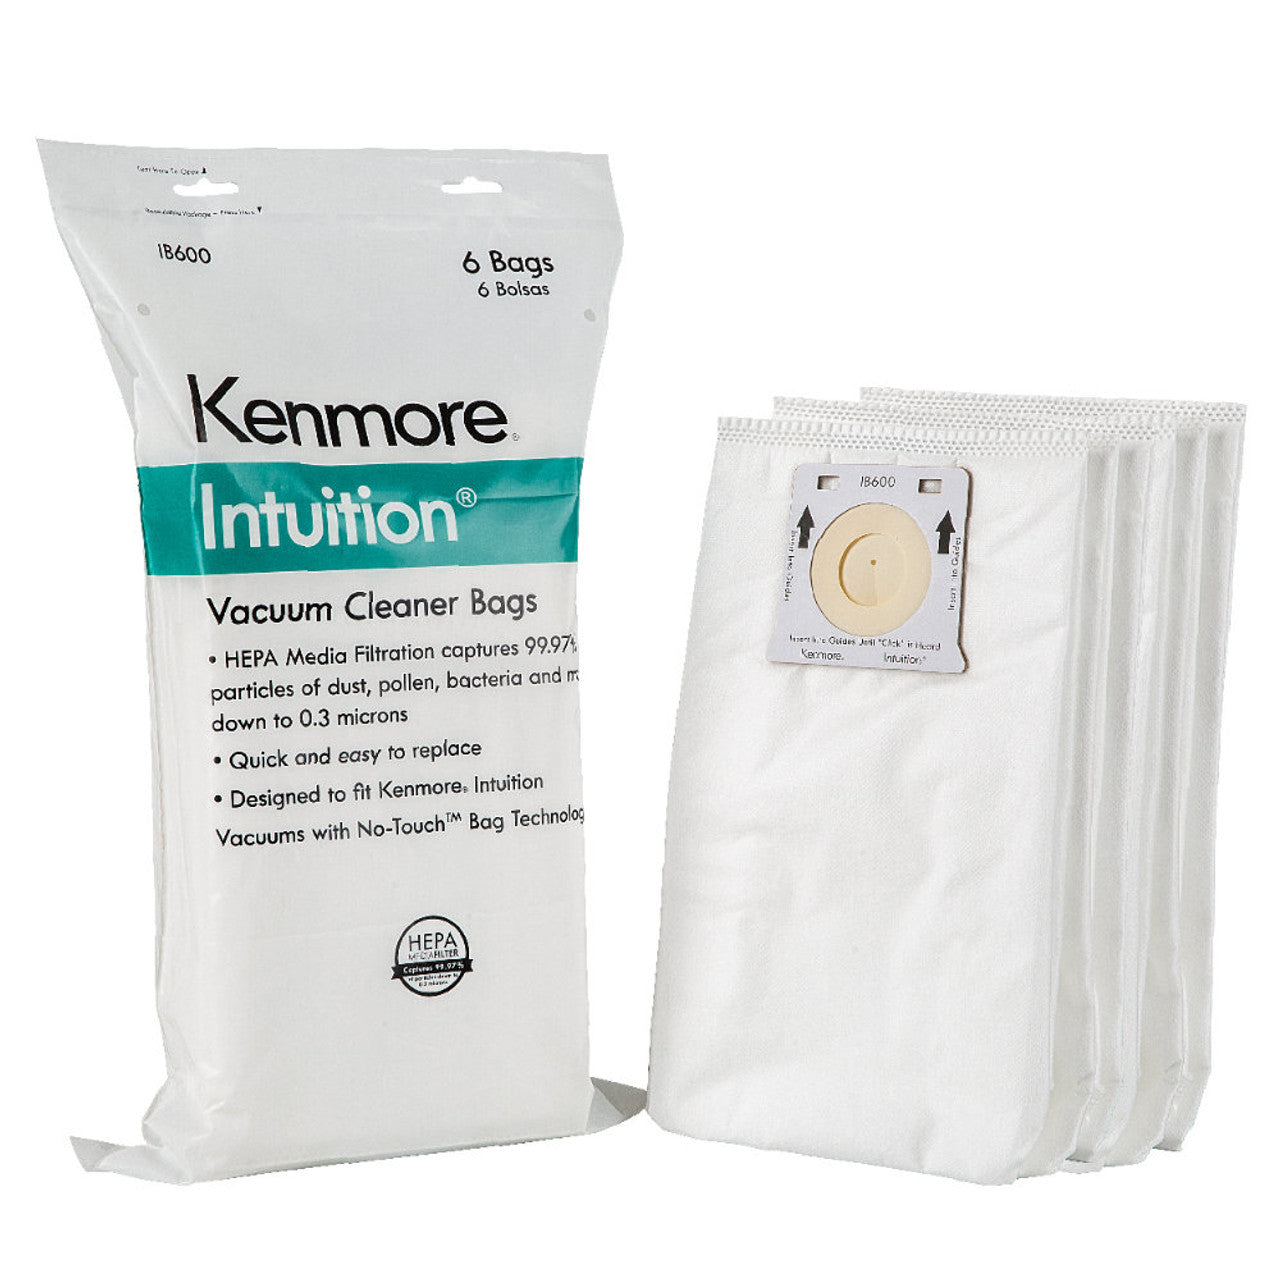 Kenmore IB600 HEPA Replacement Intuition Vacuum Cleaner Bags (6-pack)